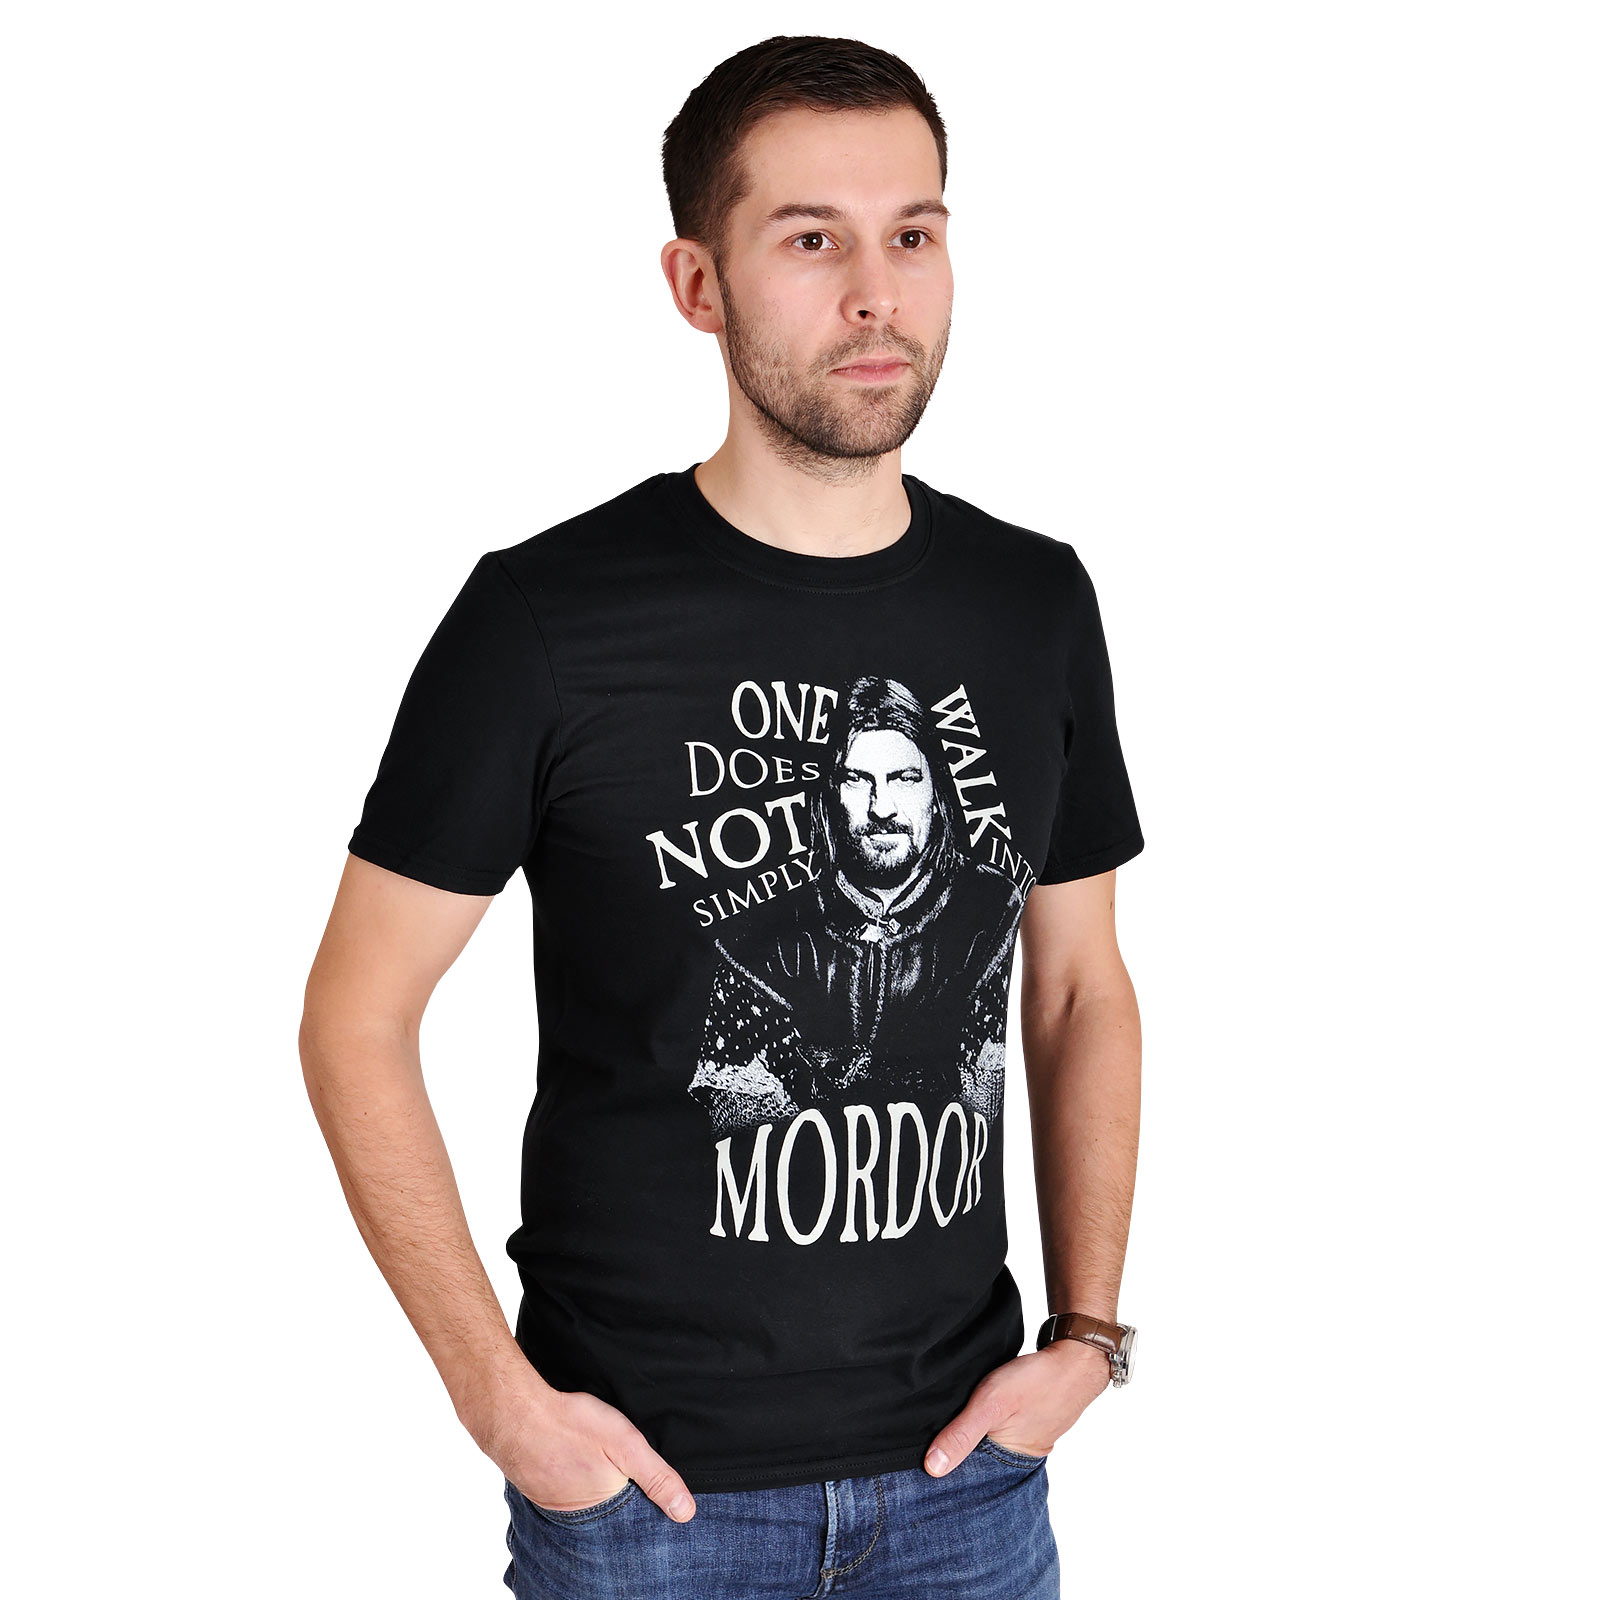 Herr der Ringe - Boromir Walk into Mordor T-Shirt schwarz